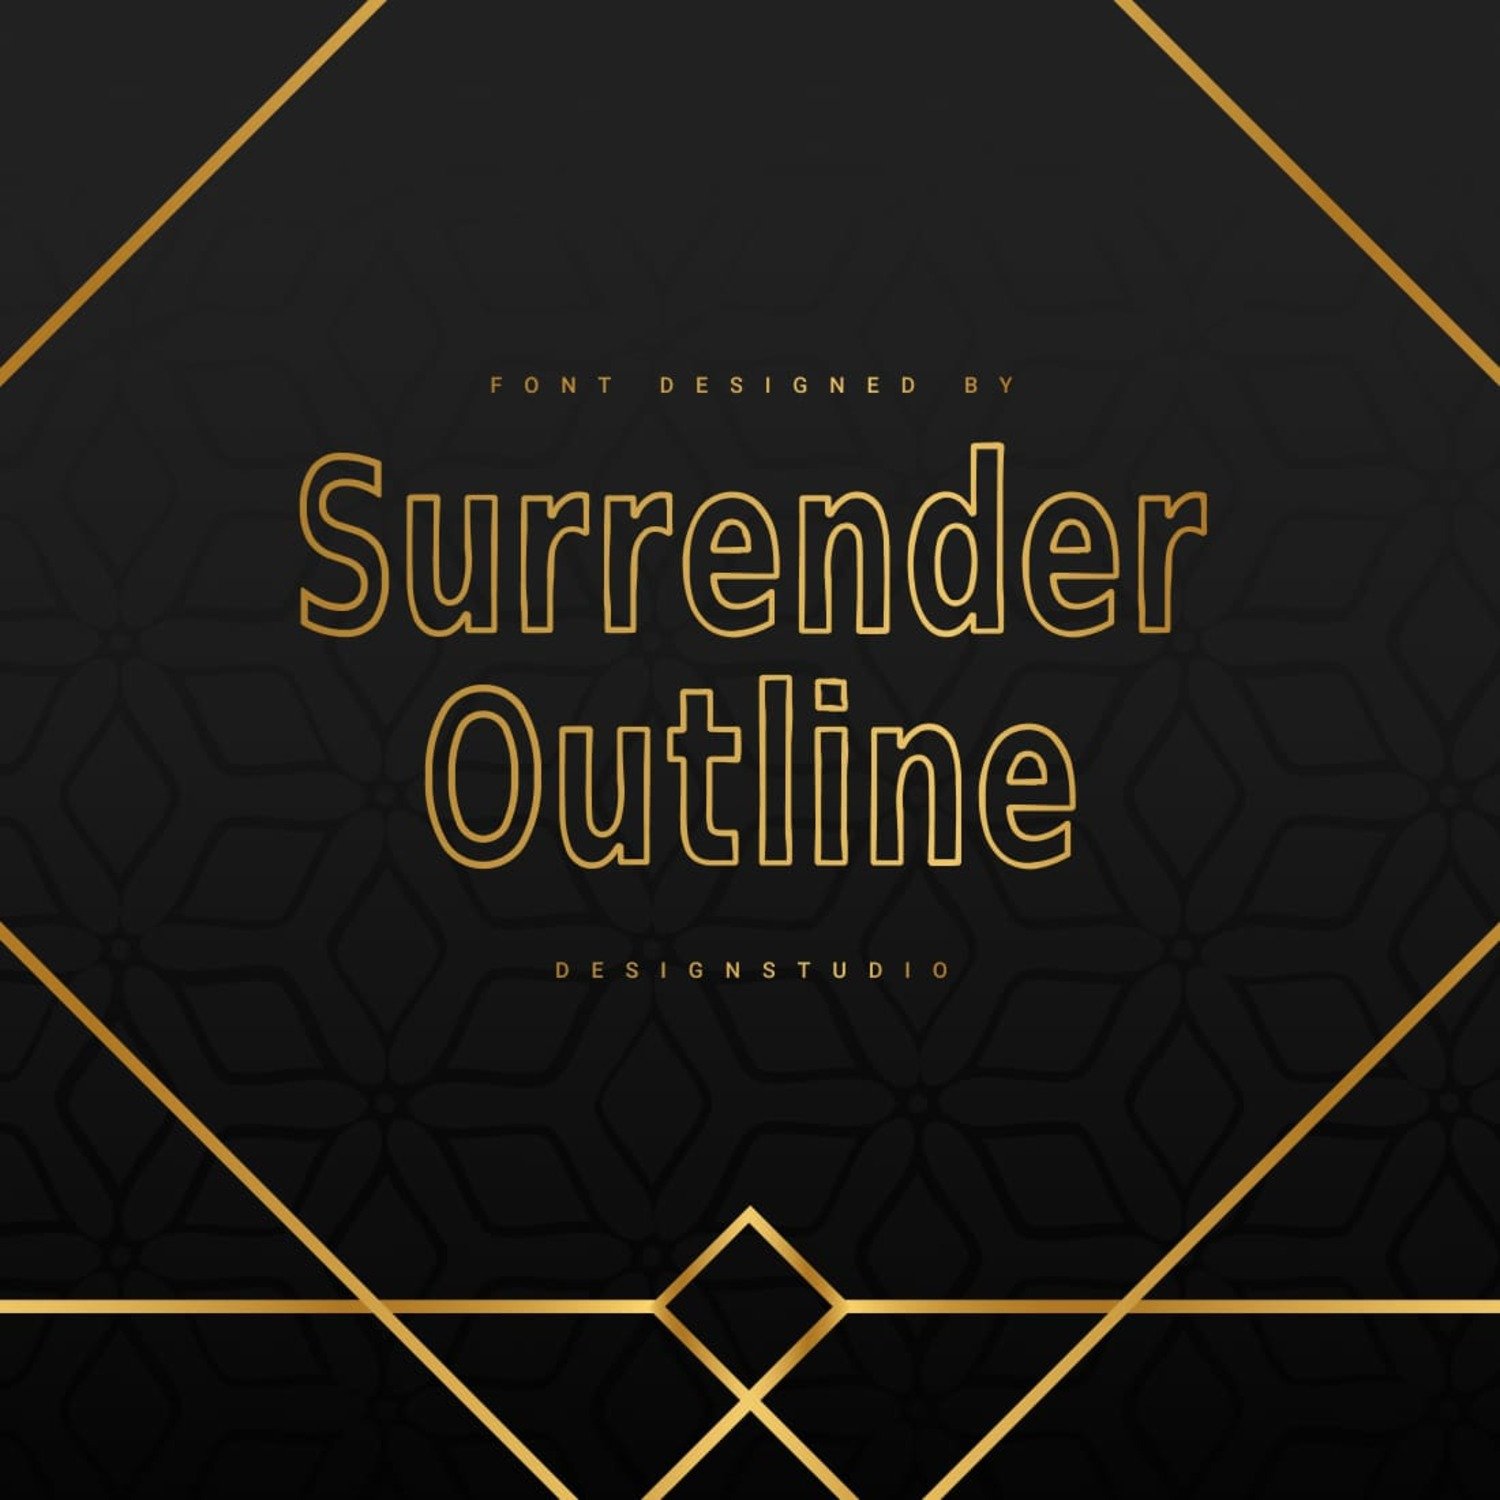 Surrender Outline Sans Serif Font main cover.